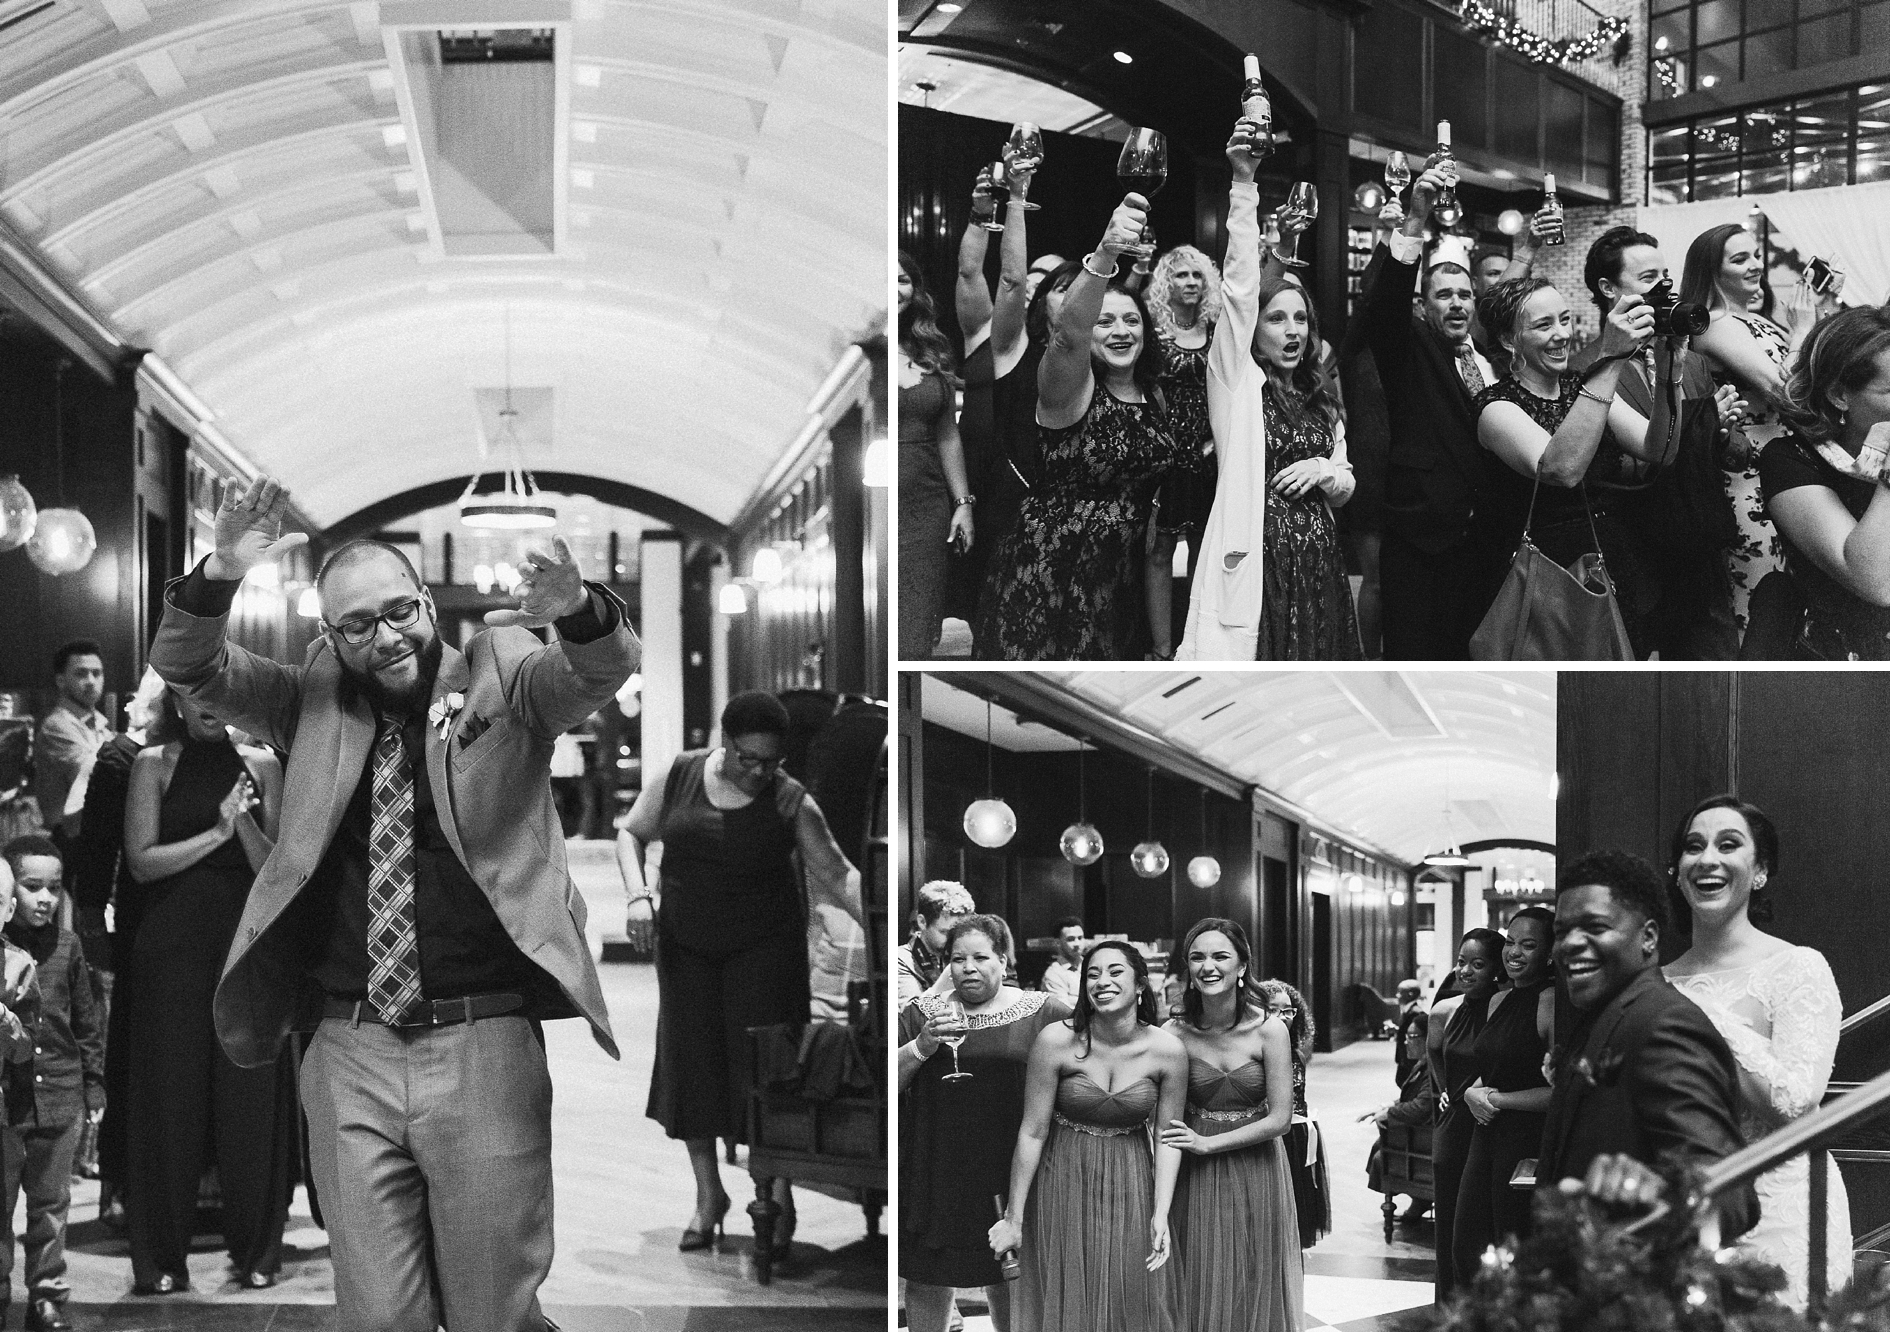 Oxford Exchange Wedding | © Ailyn La Torre Photography 2017